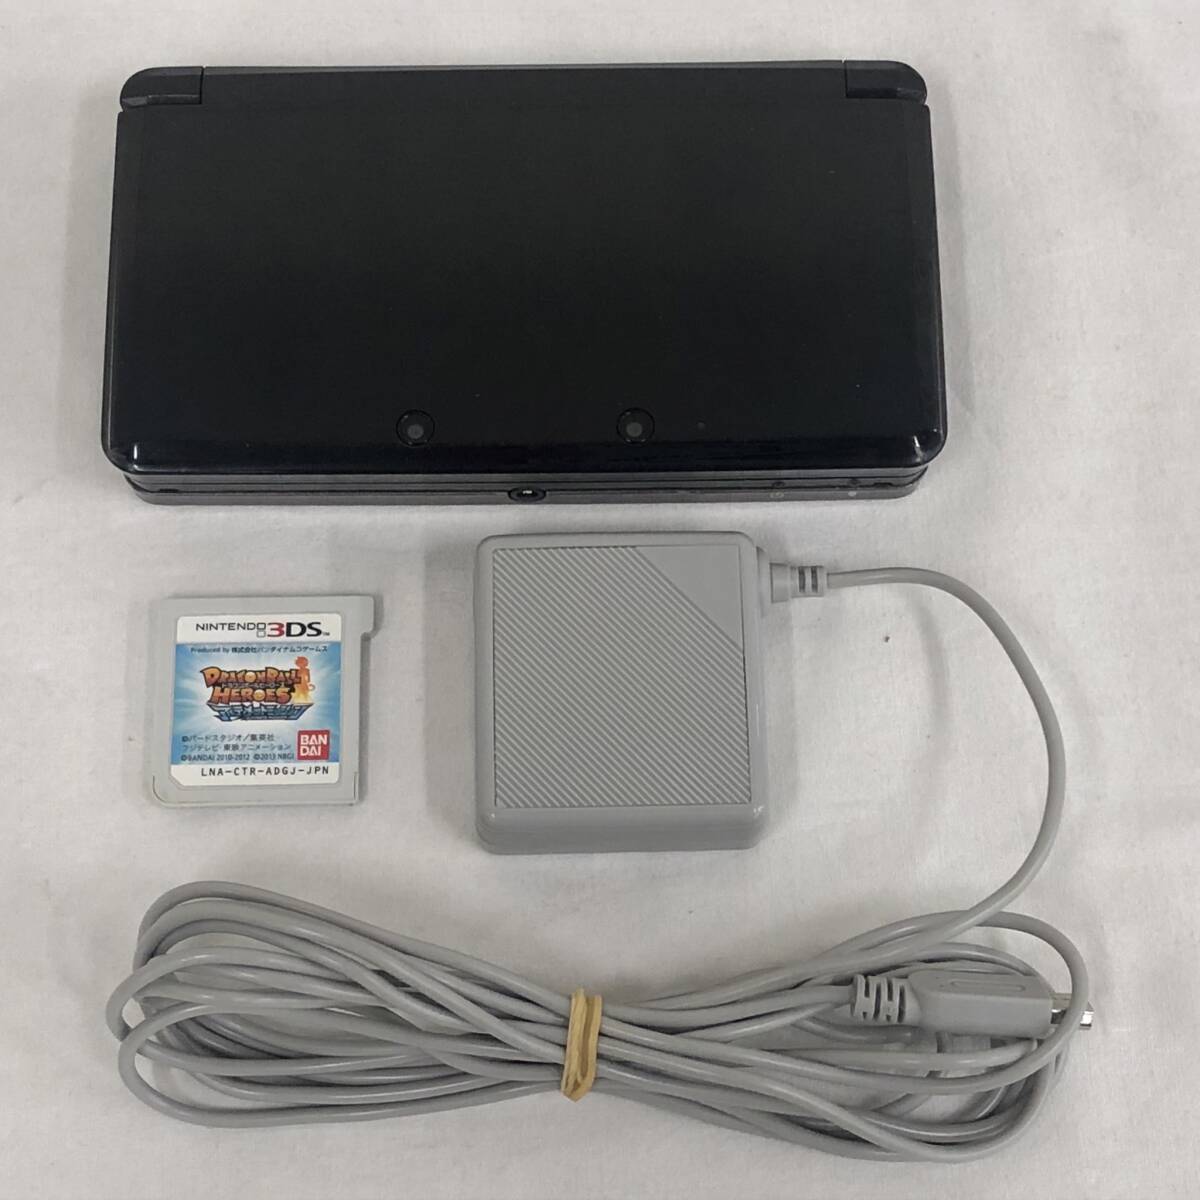 LA037168(052)-330/TN3000[ Nagoya ]Nintendo Nintendo 3DS CTR-001 game machine / soft 1 point 